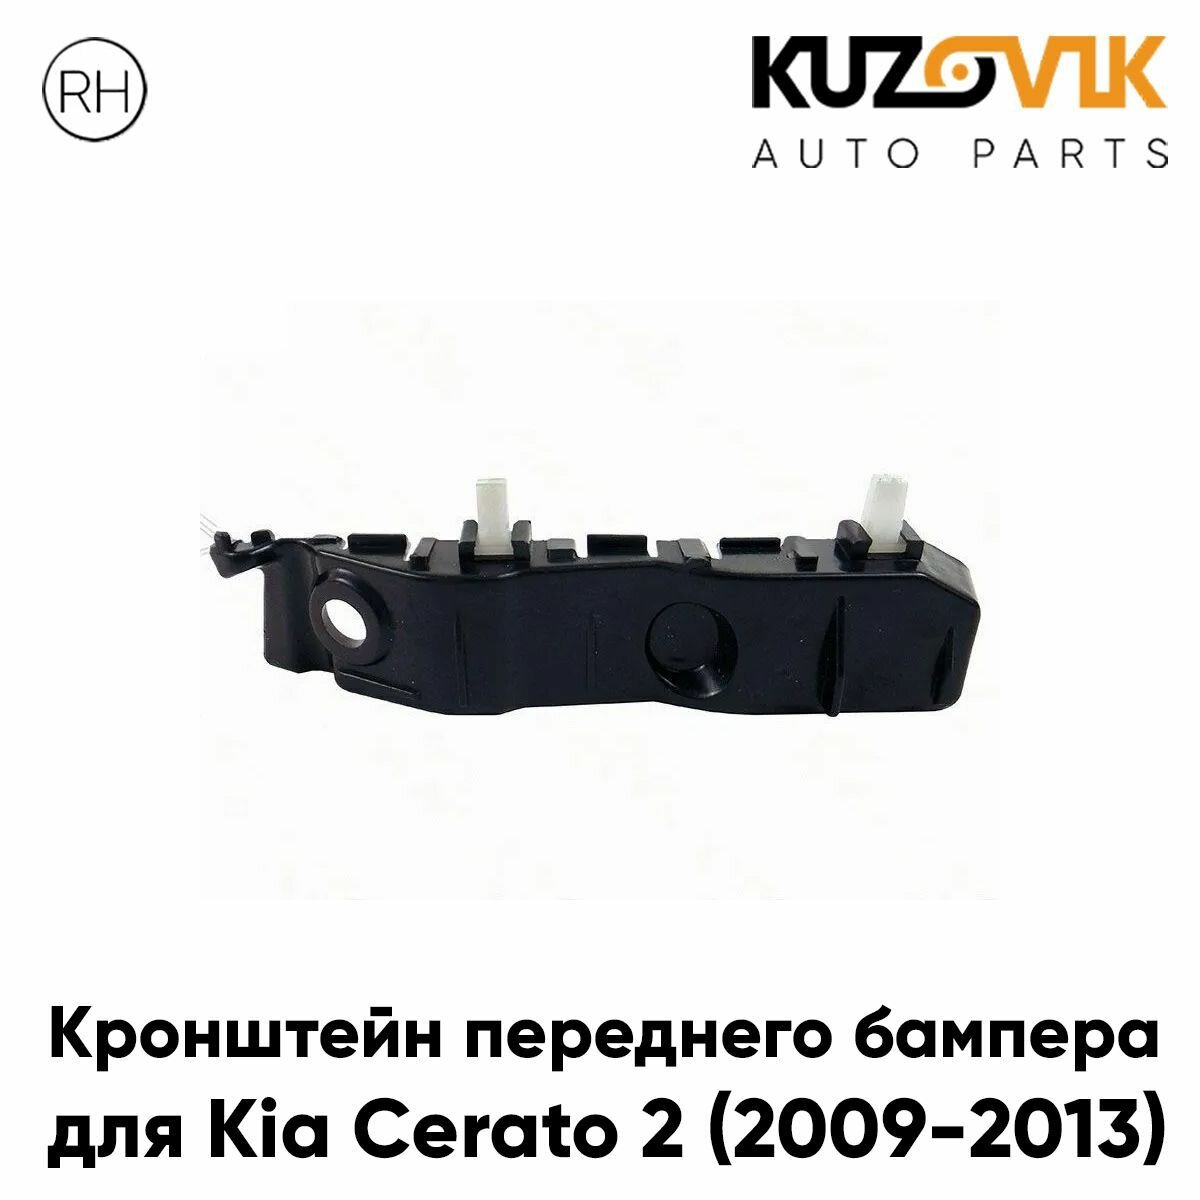 Кронштейн переднего бампера правый Kia Cerato 2 (2009-2012)